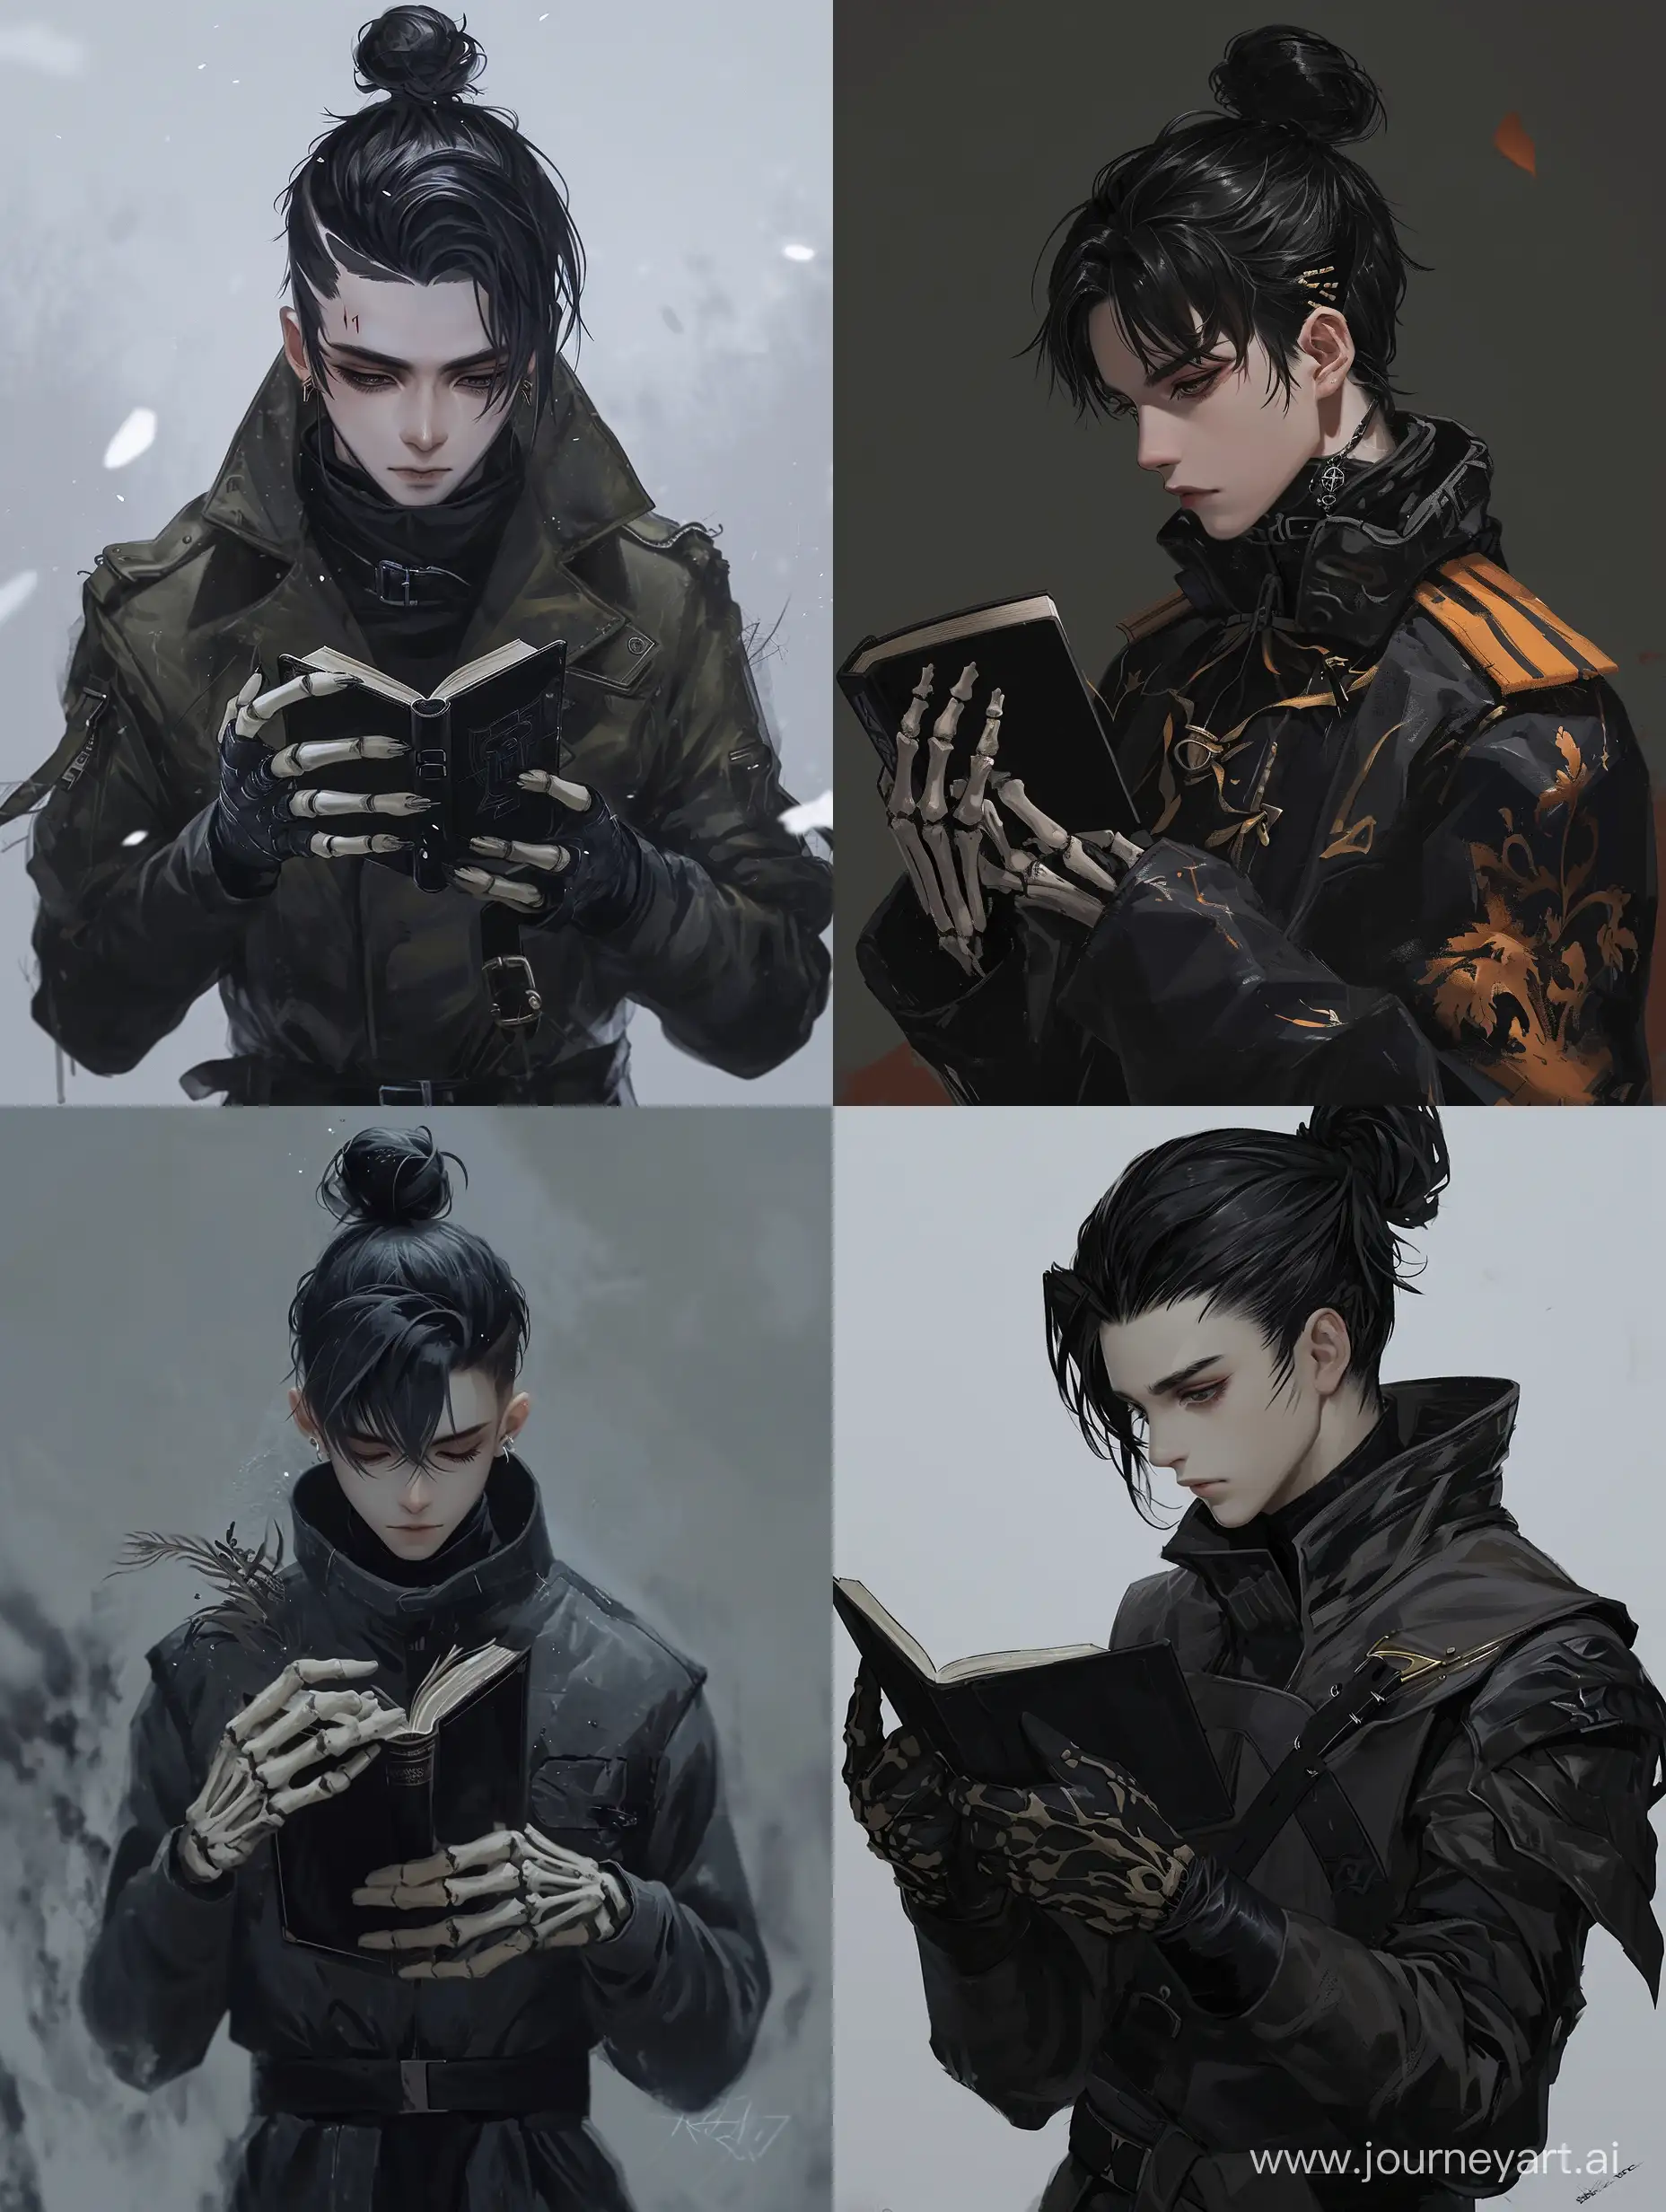 Mysterious-Anime-Leader-with-Bone-Gloves-in-Noir-Fantasy-World